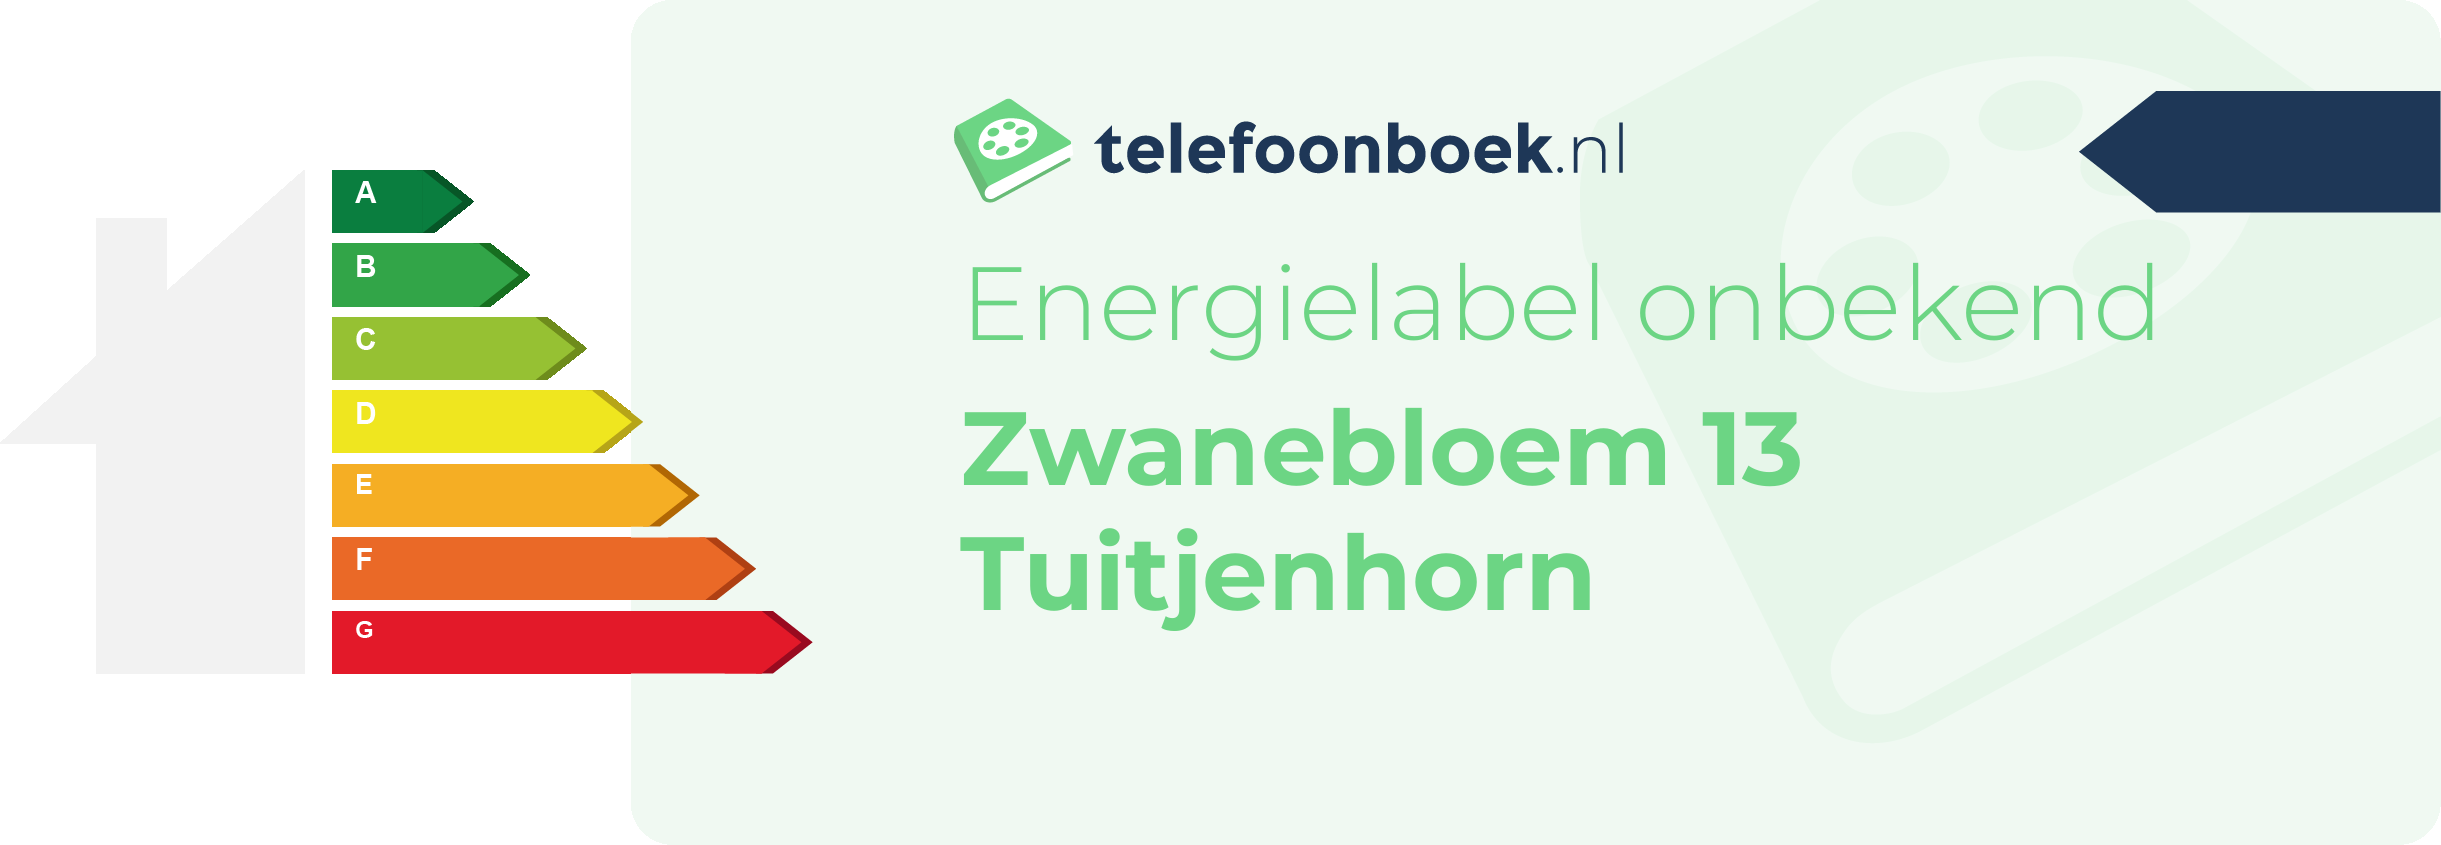 Energielabel Zwanebloem 13 Tuitjenhorn